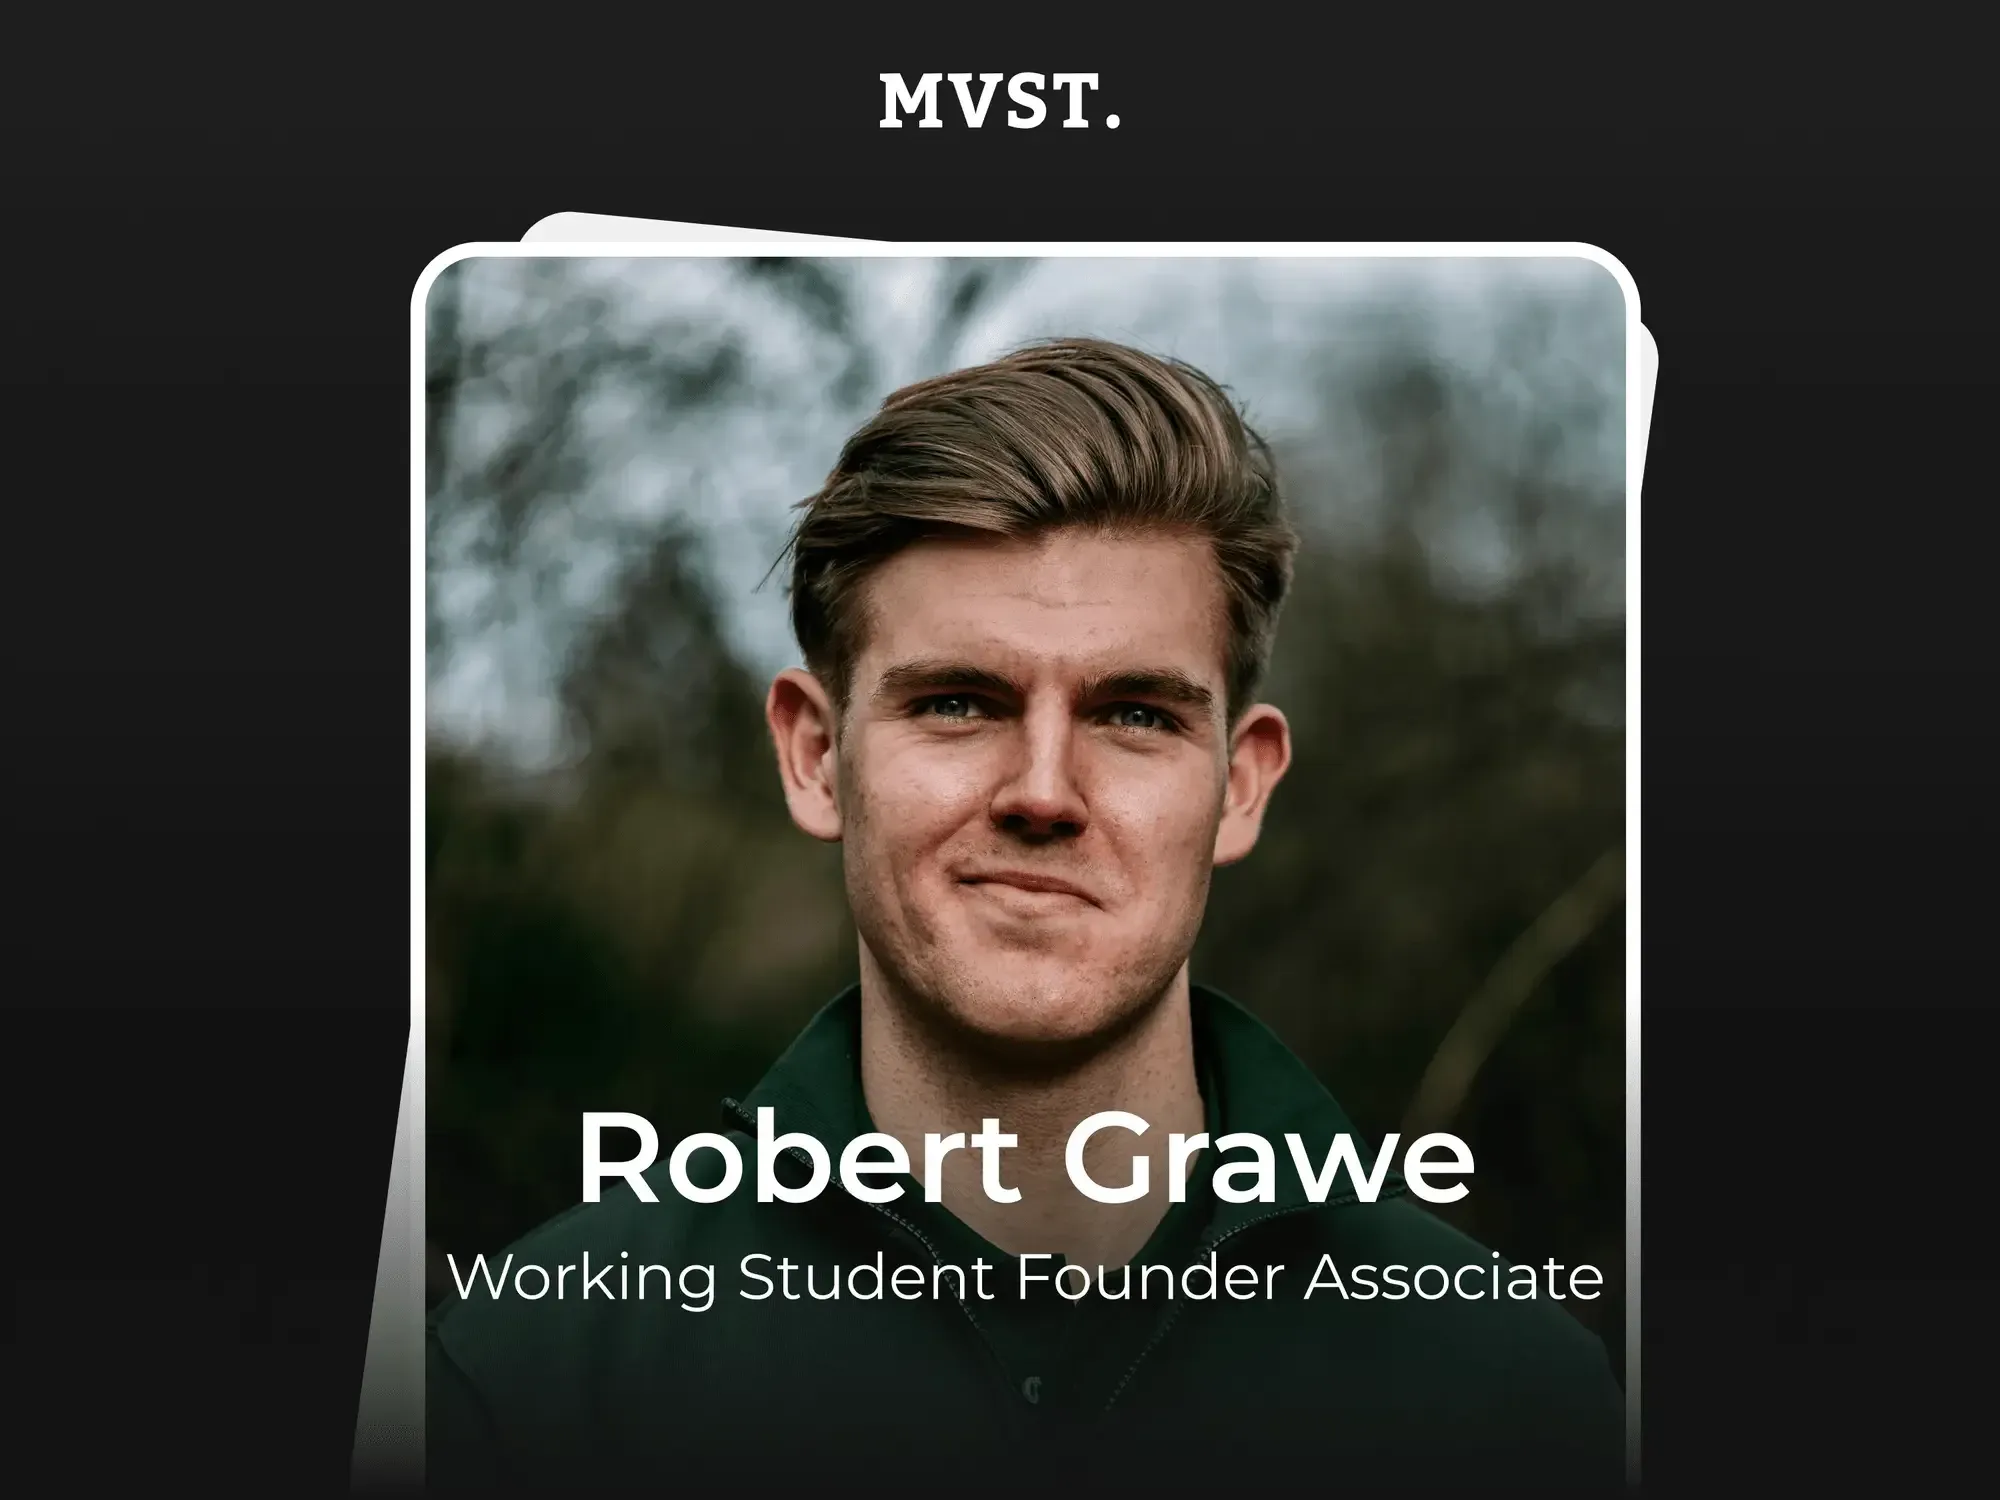 Willkommen bei MVST, Robert!